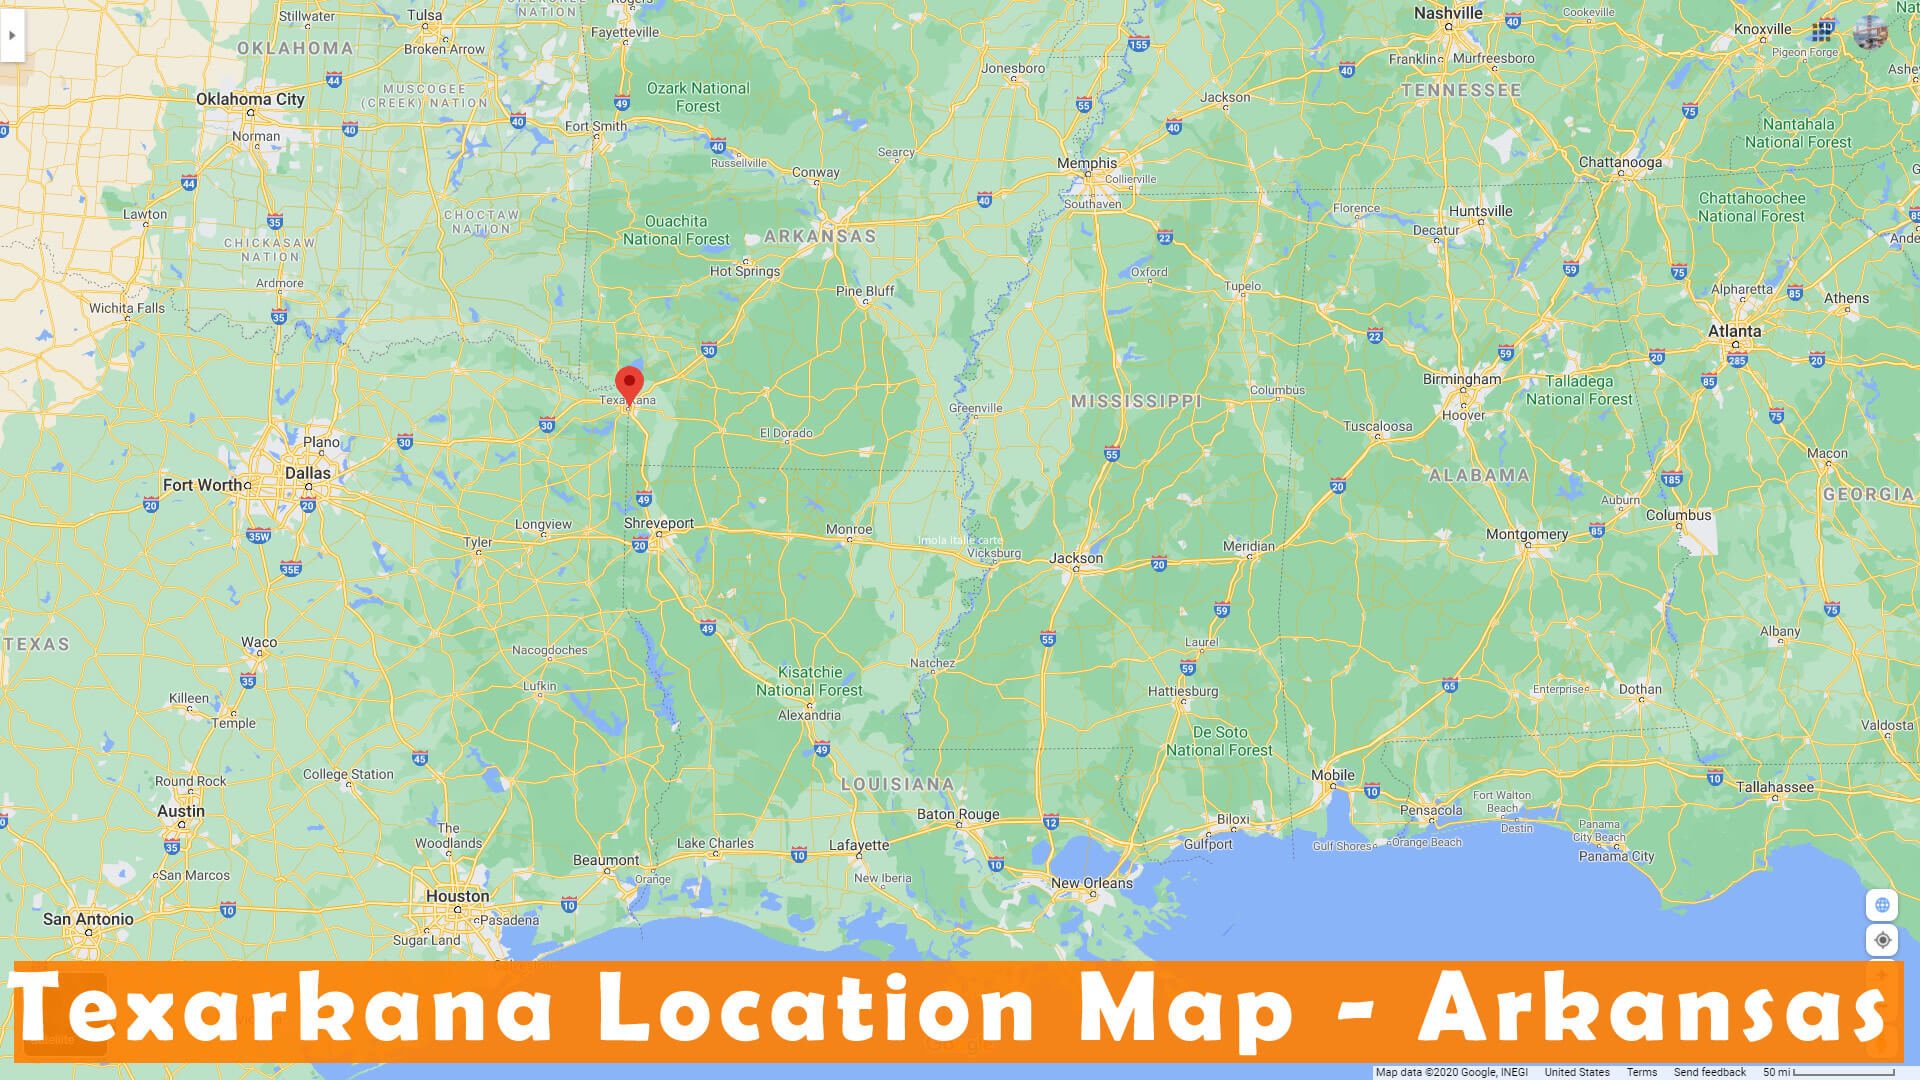 Texarkana Location Map Arkansas